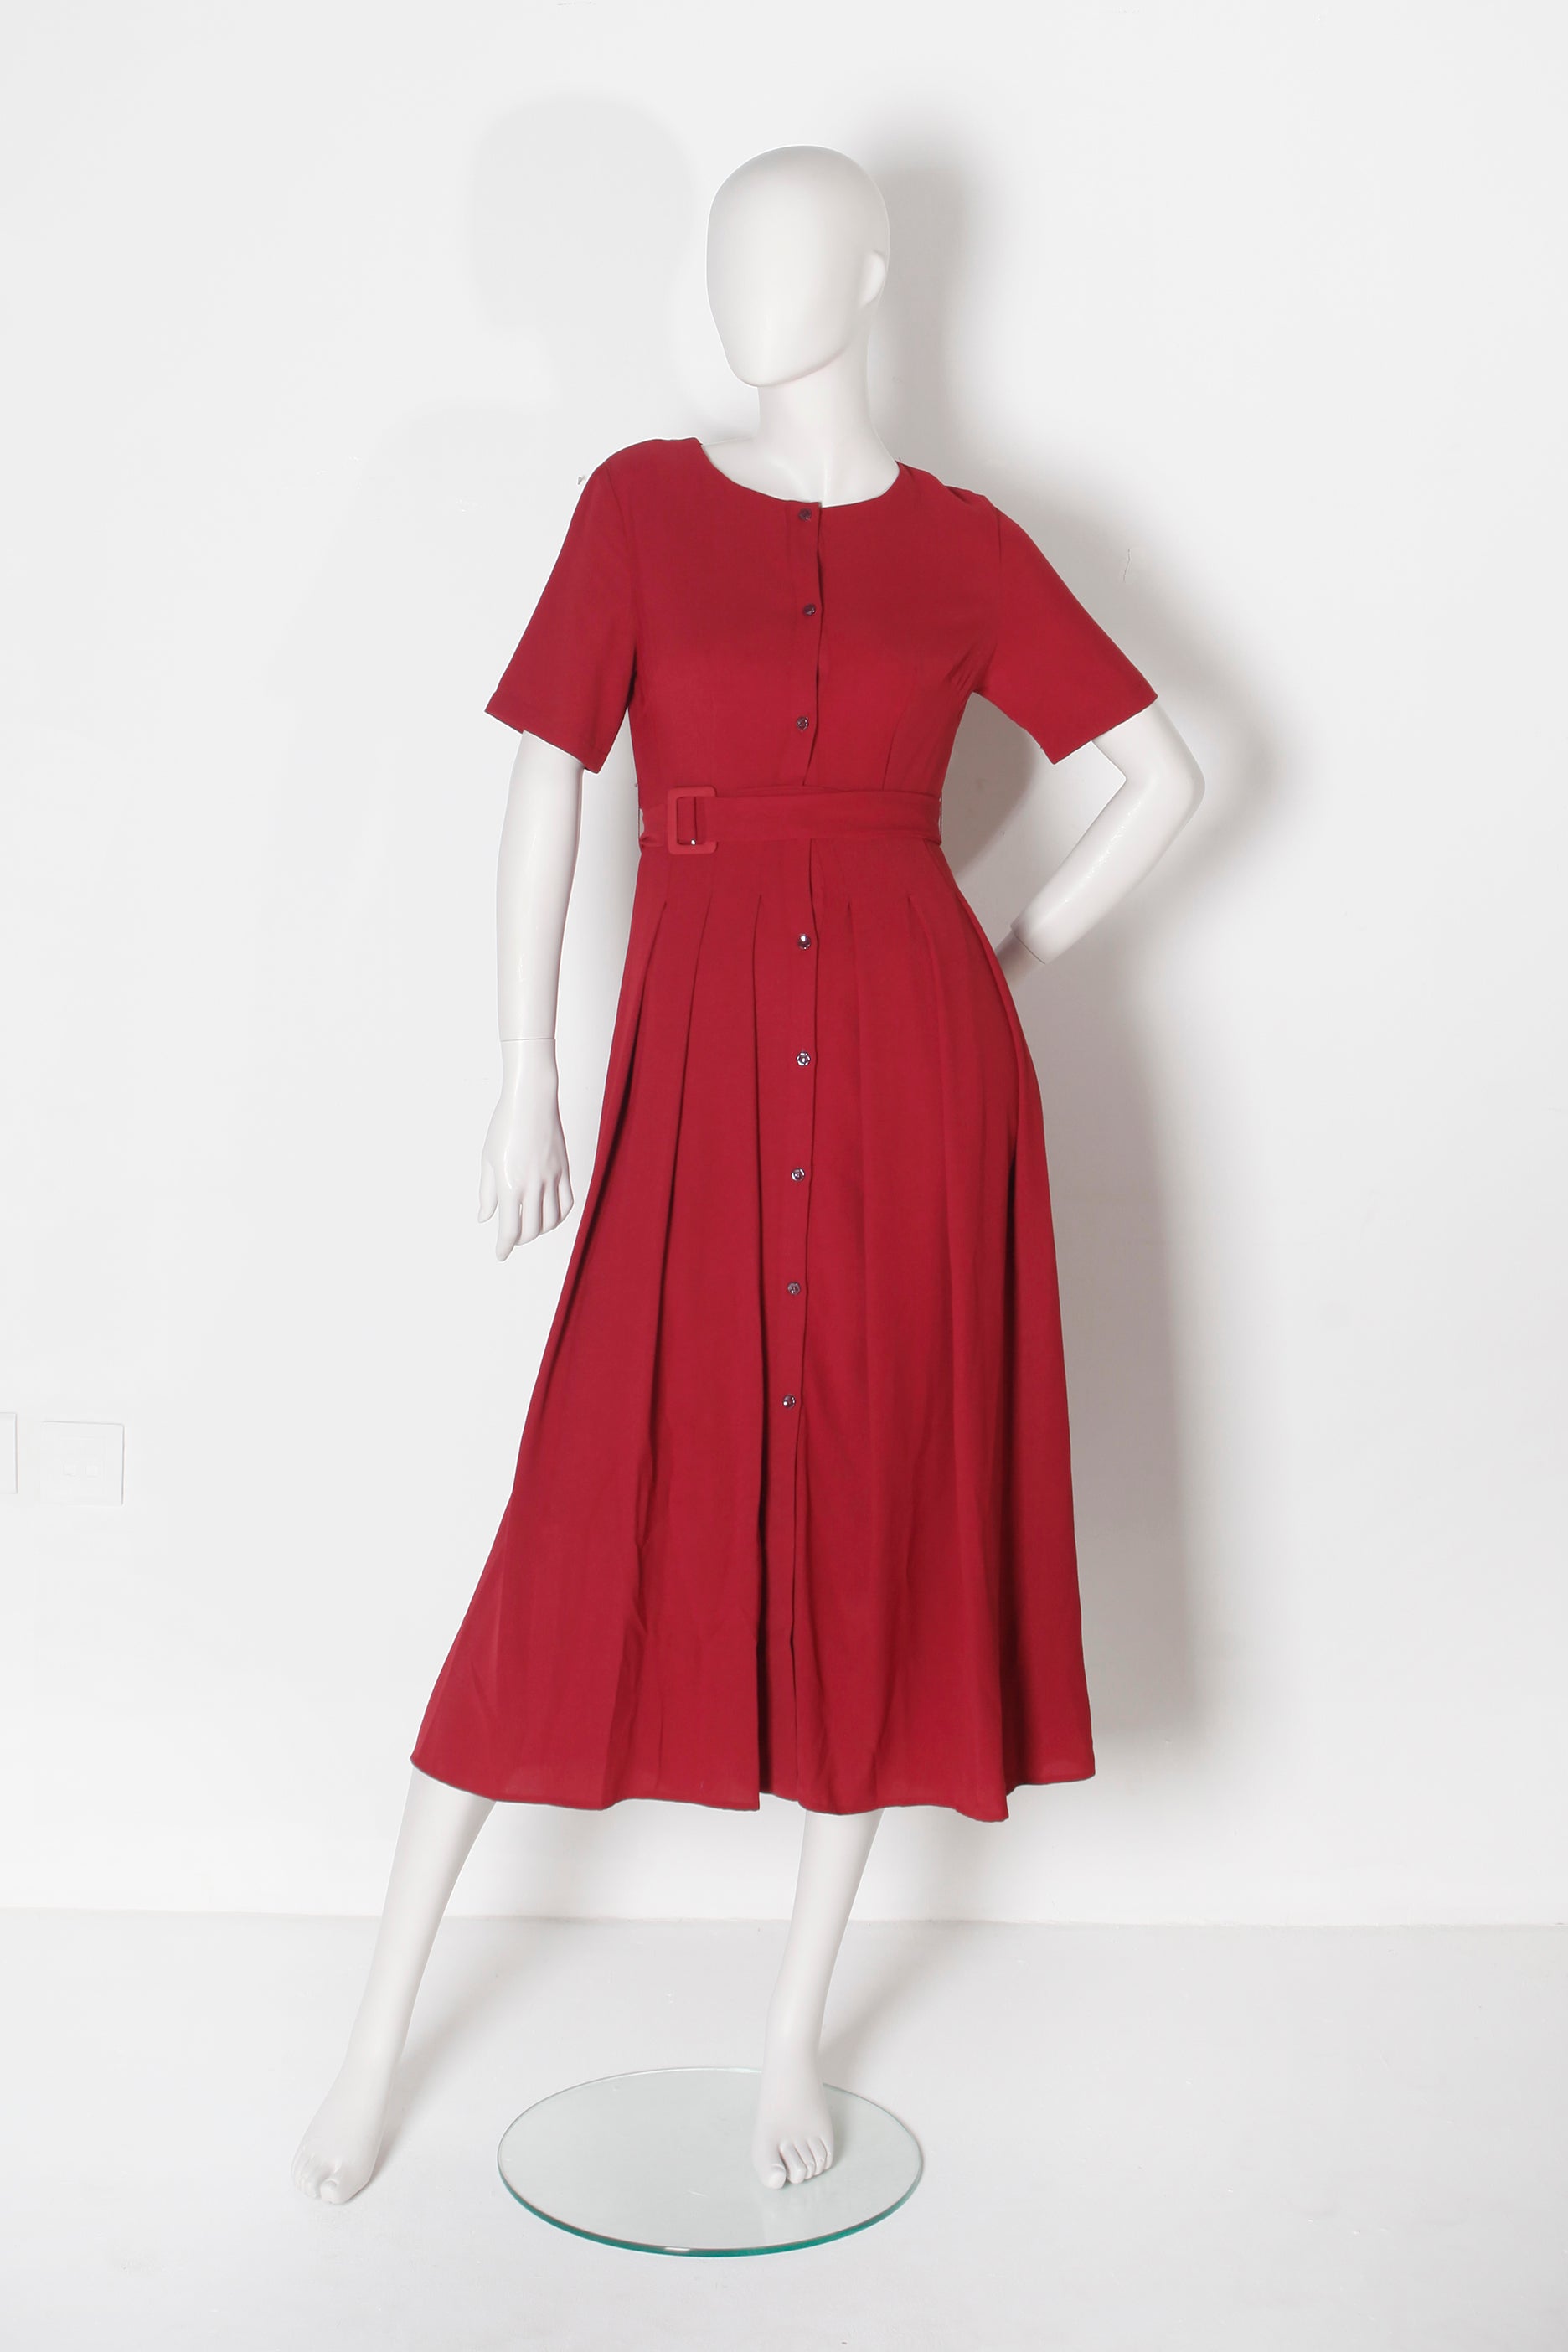 Red Belted Midi Dress (medium)